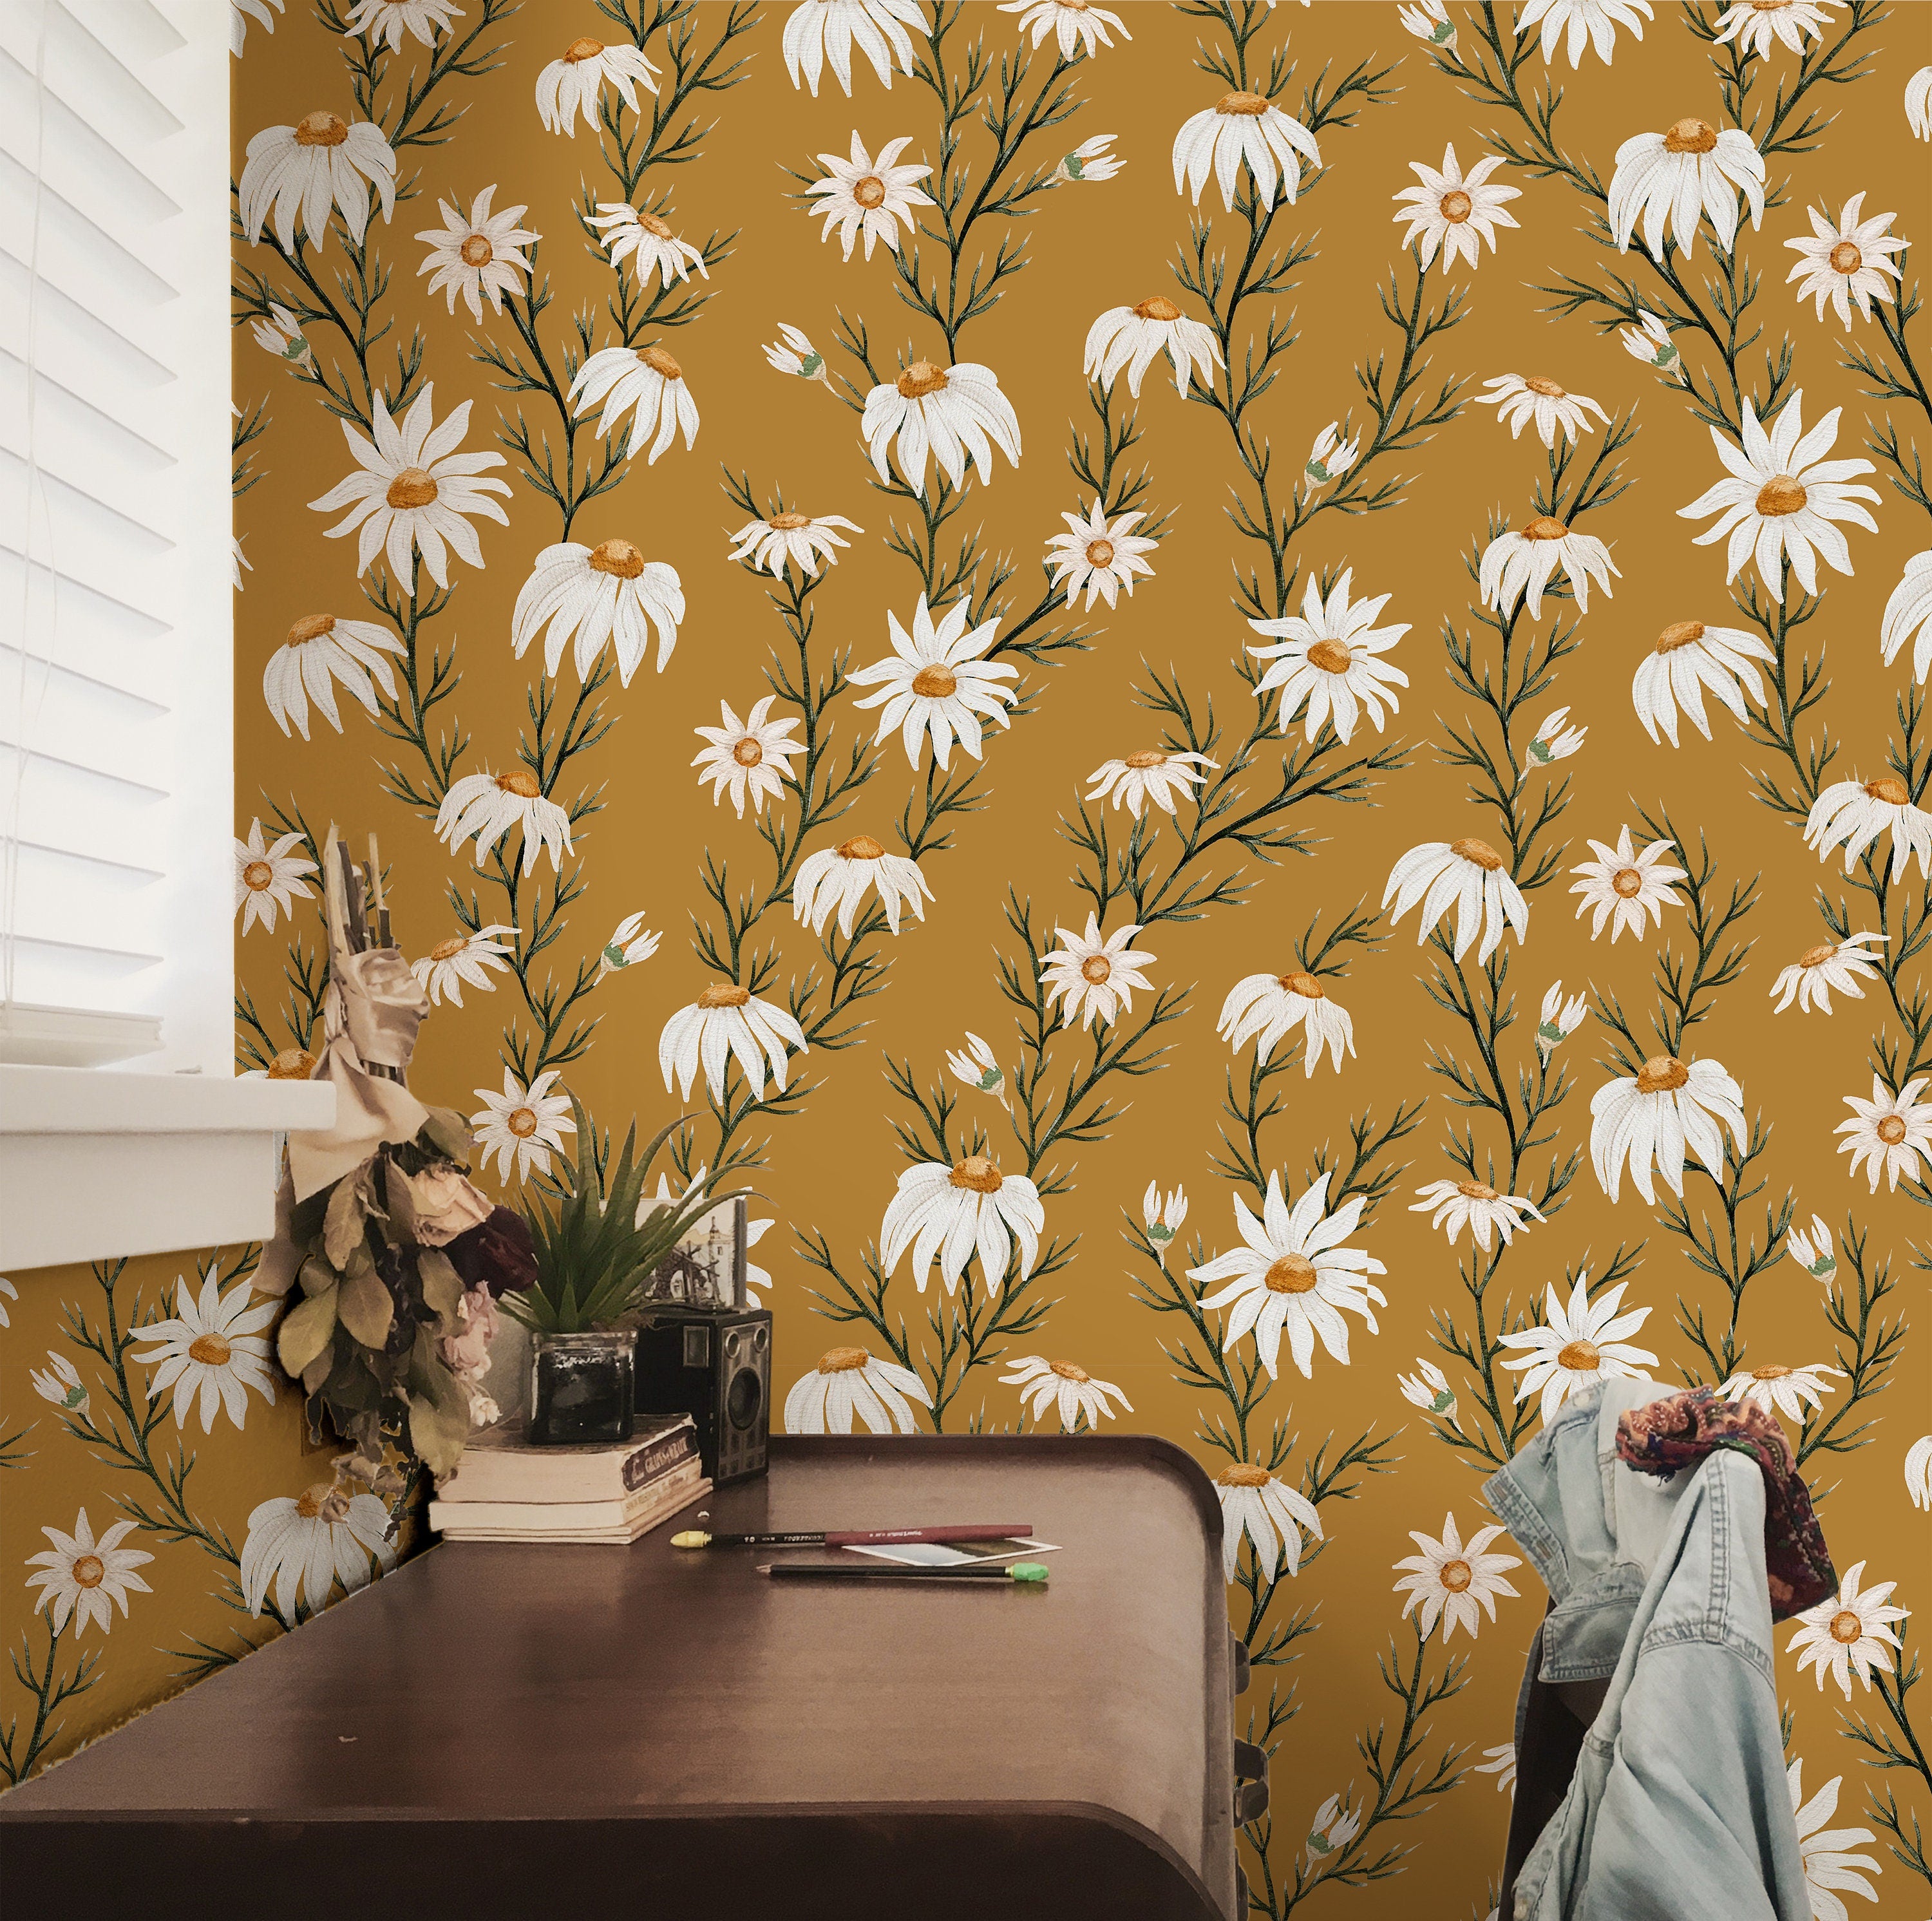 Southern Daisy Floral Wallpaper | Wallpaper Peel and Stick | Removable Wallpaper | Peel and Stick Wallpaper | Wall Paper Peel And Stick  912 - JamesAndColors